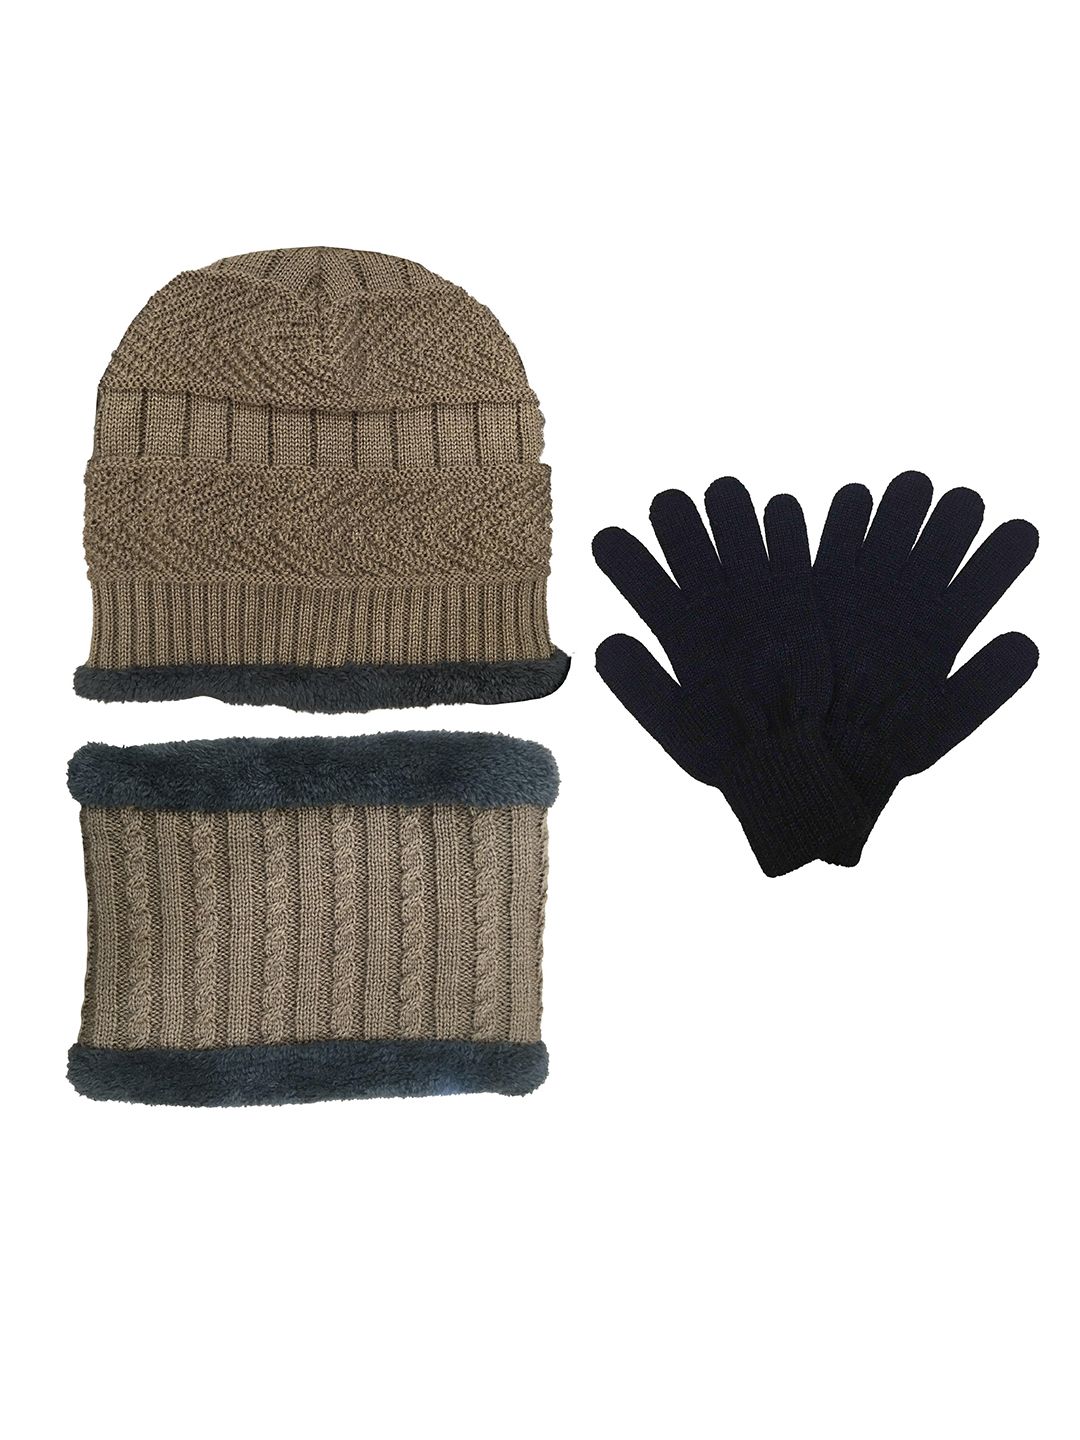 Gajraj Unisex Beige & Black Pack of 2 Beanie Caps & Warmer Scarf and Woolen Gloves Set Price in India